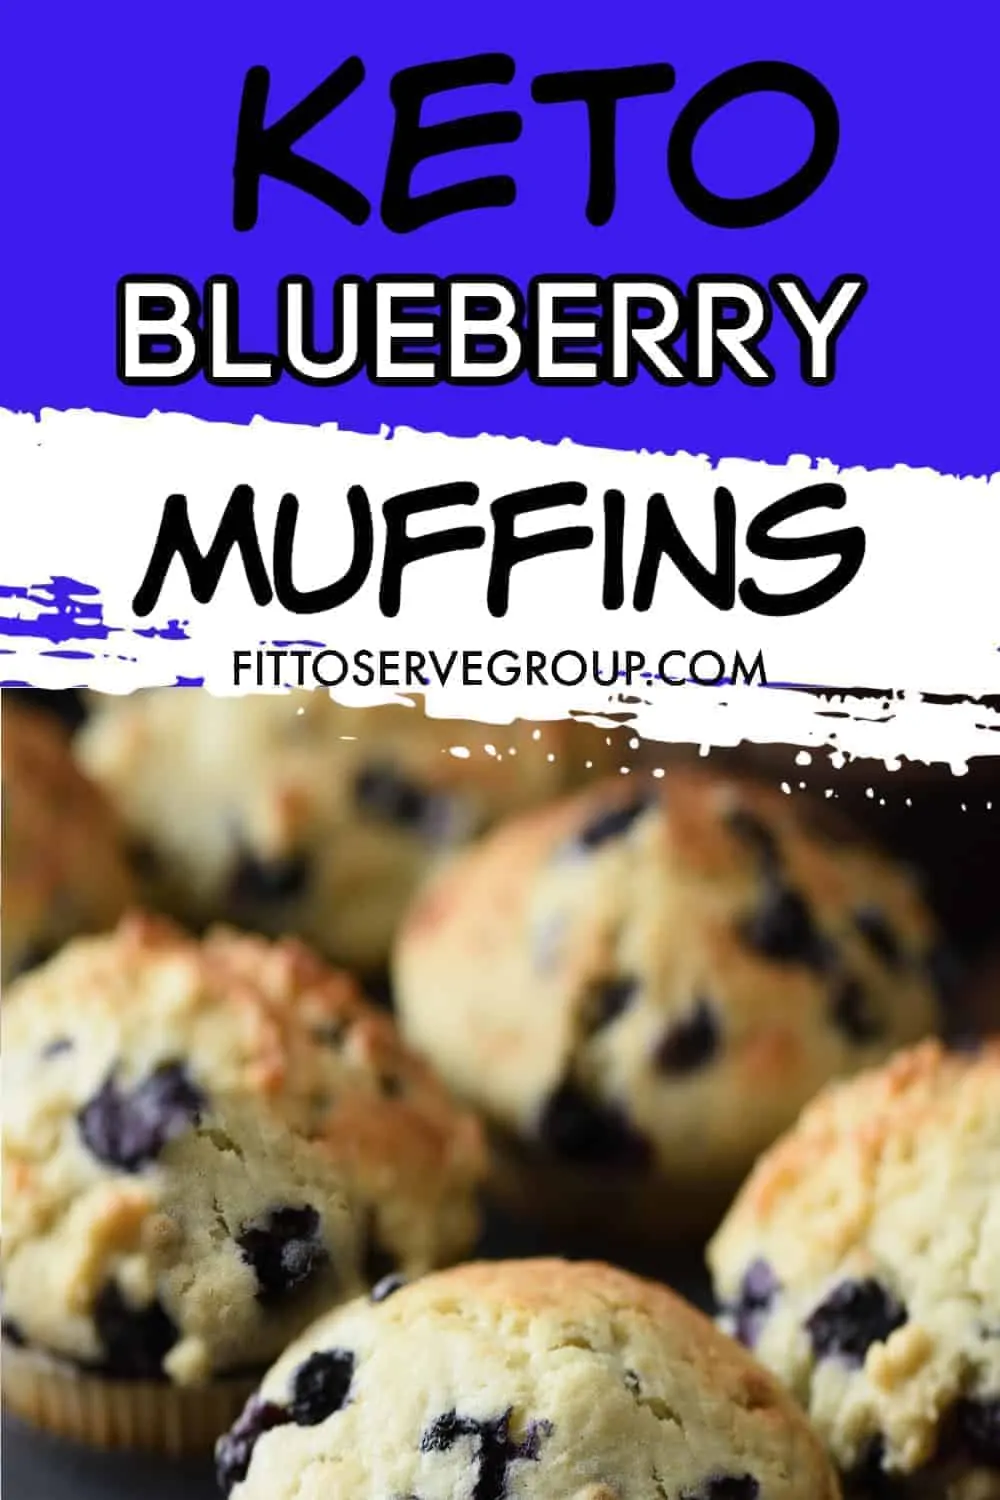 Keto blueberry muffins